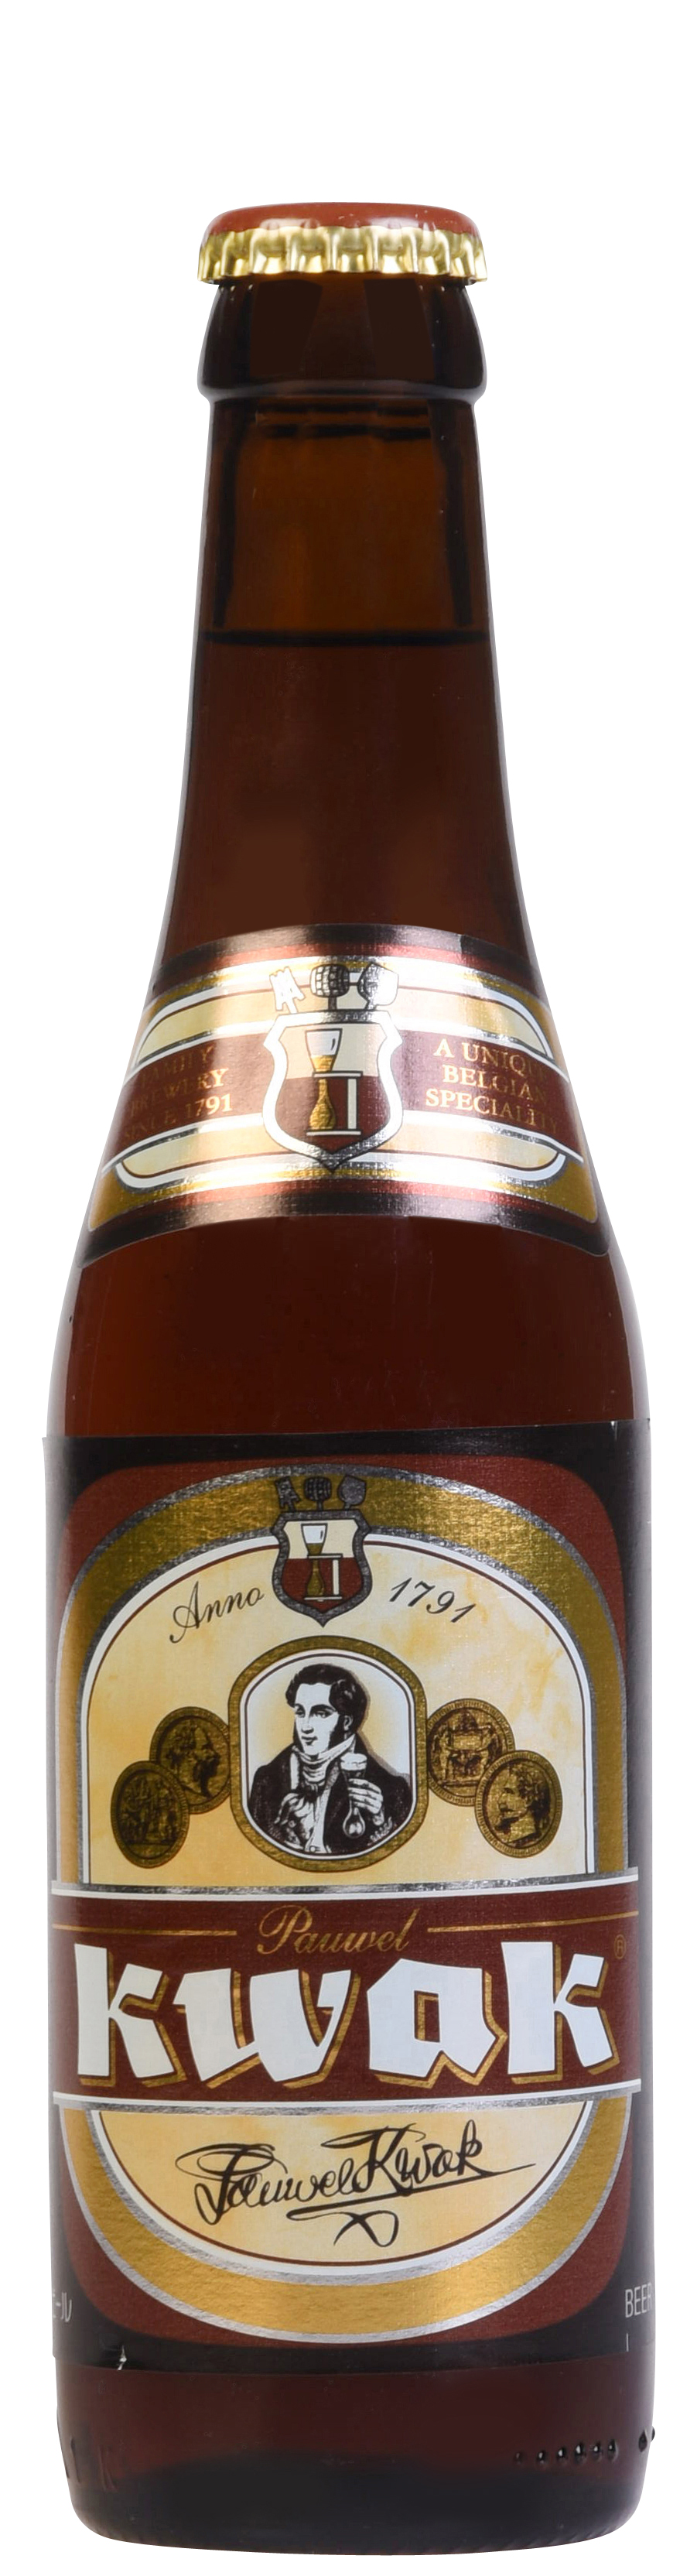 51213 Pauwels kwak bier fles 24x33 cl